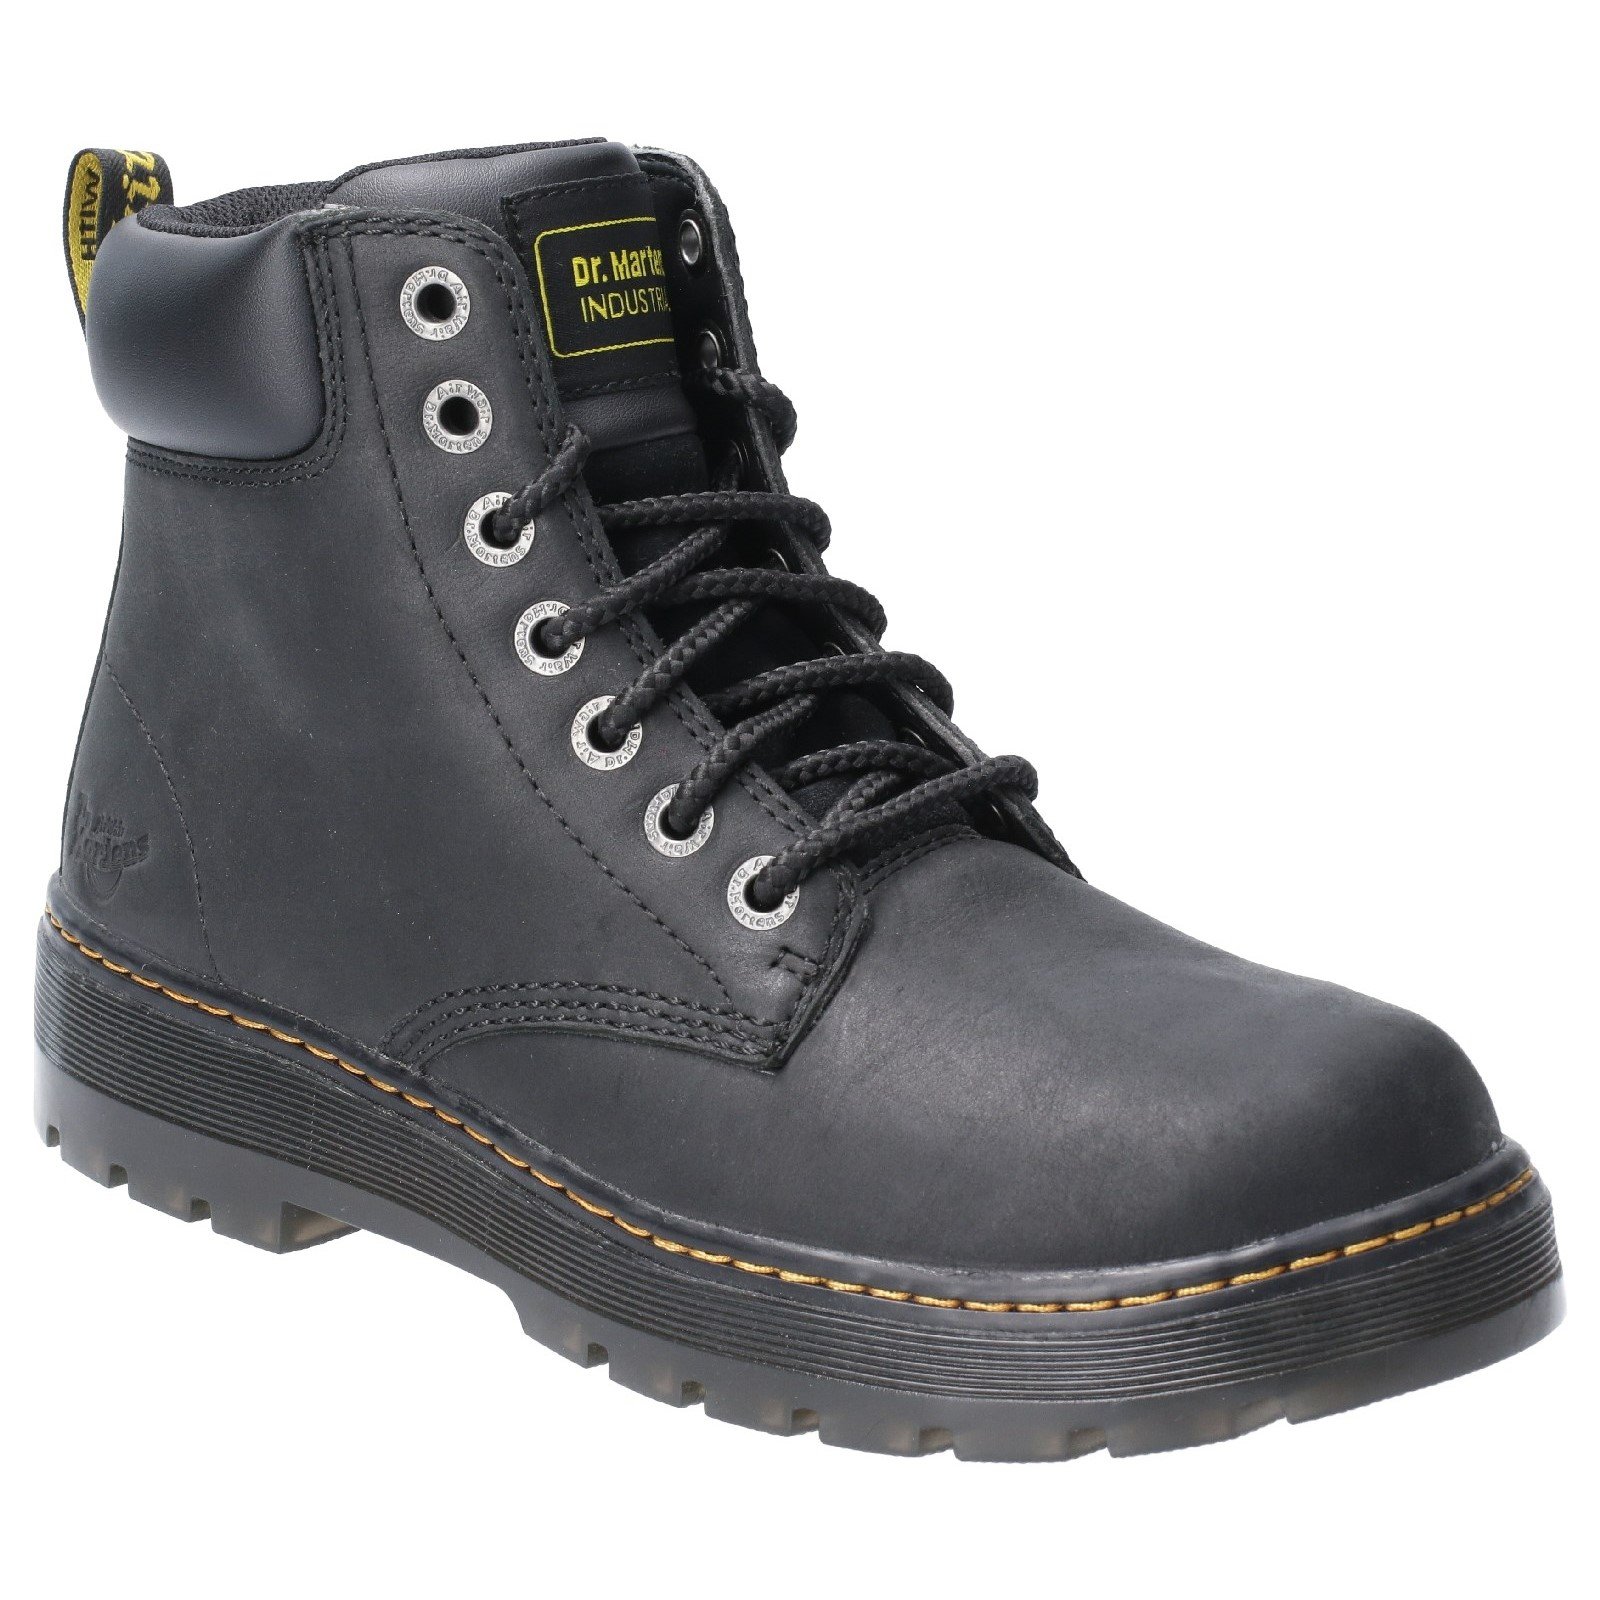 Dr Martens Men's Winch Non-Safety Work Boot Black 29821 - Black 12